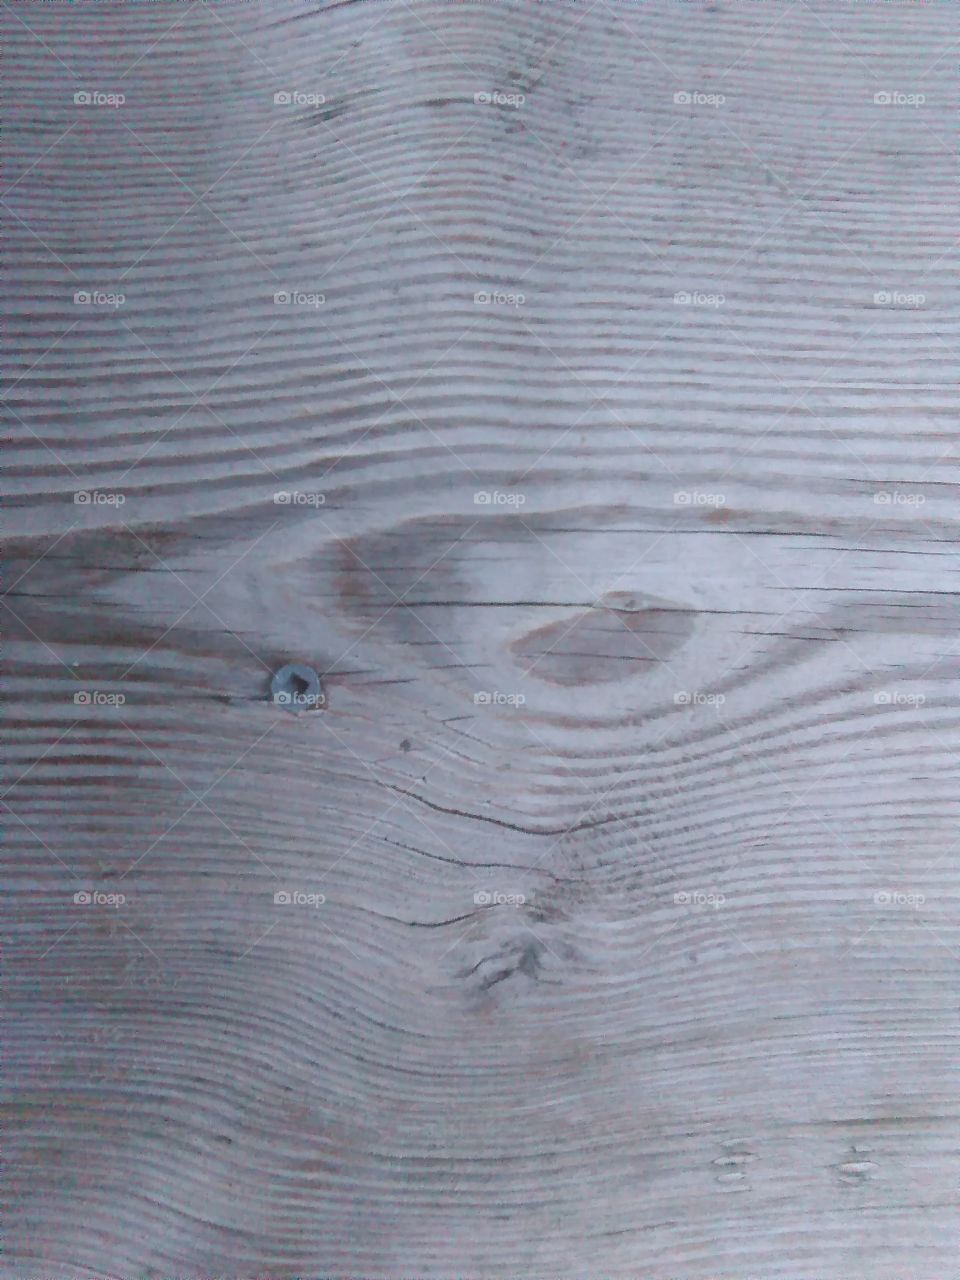 Dry wood